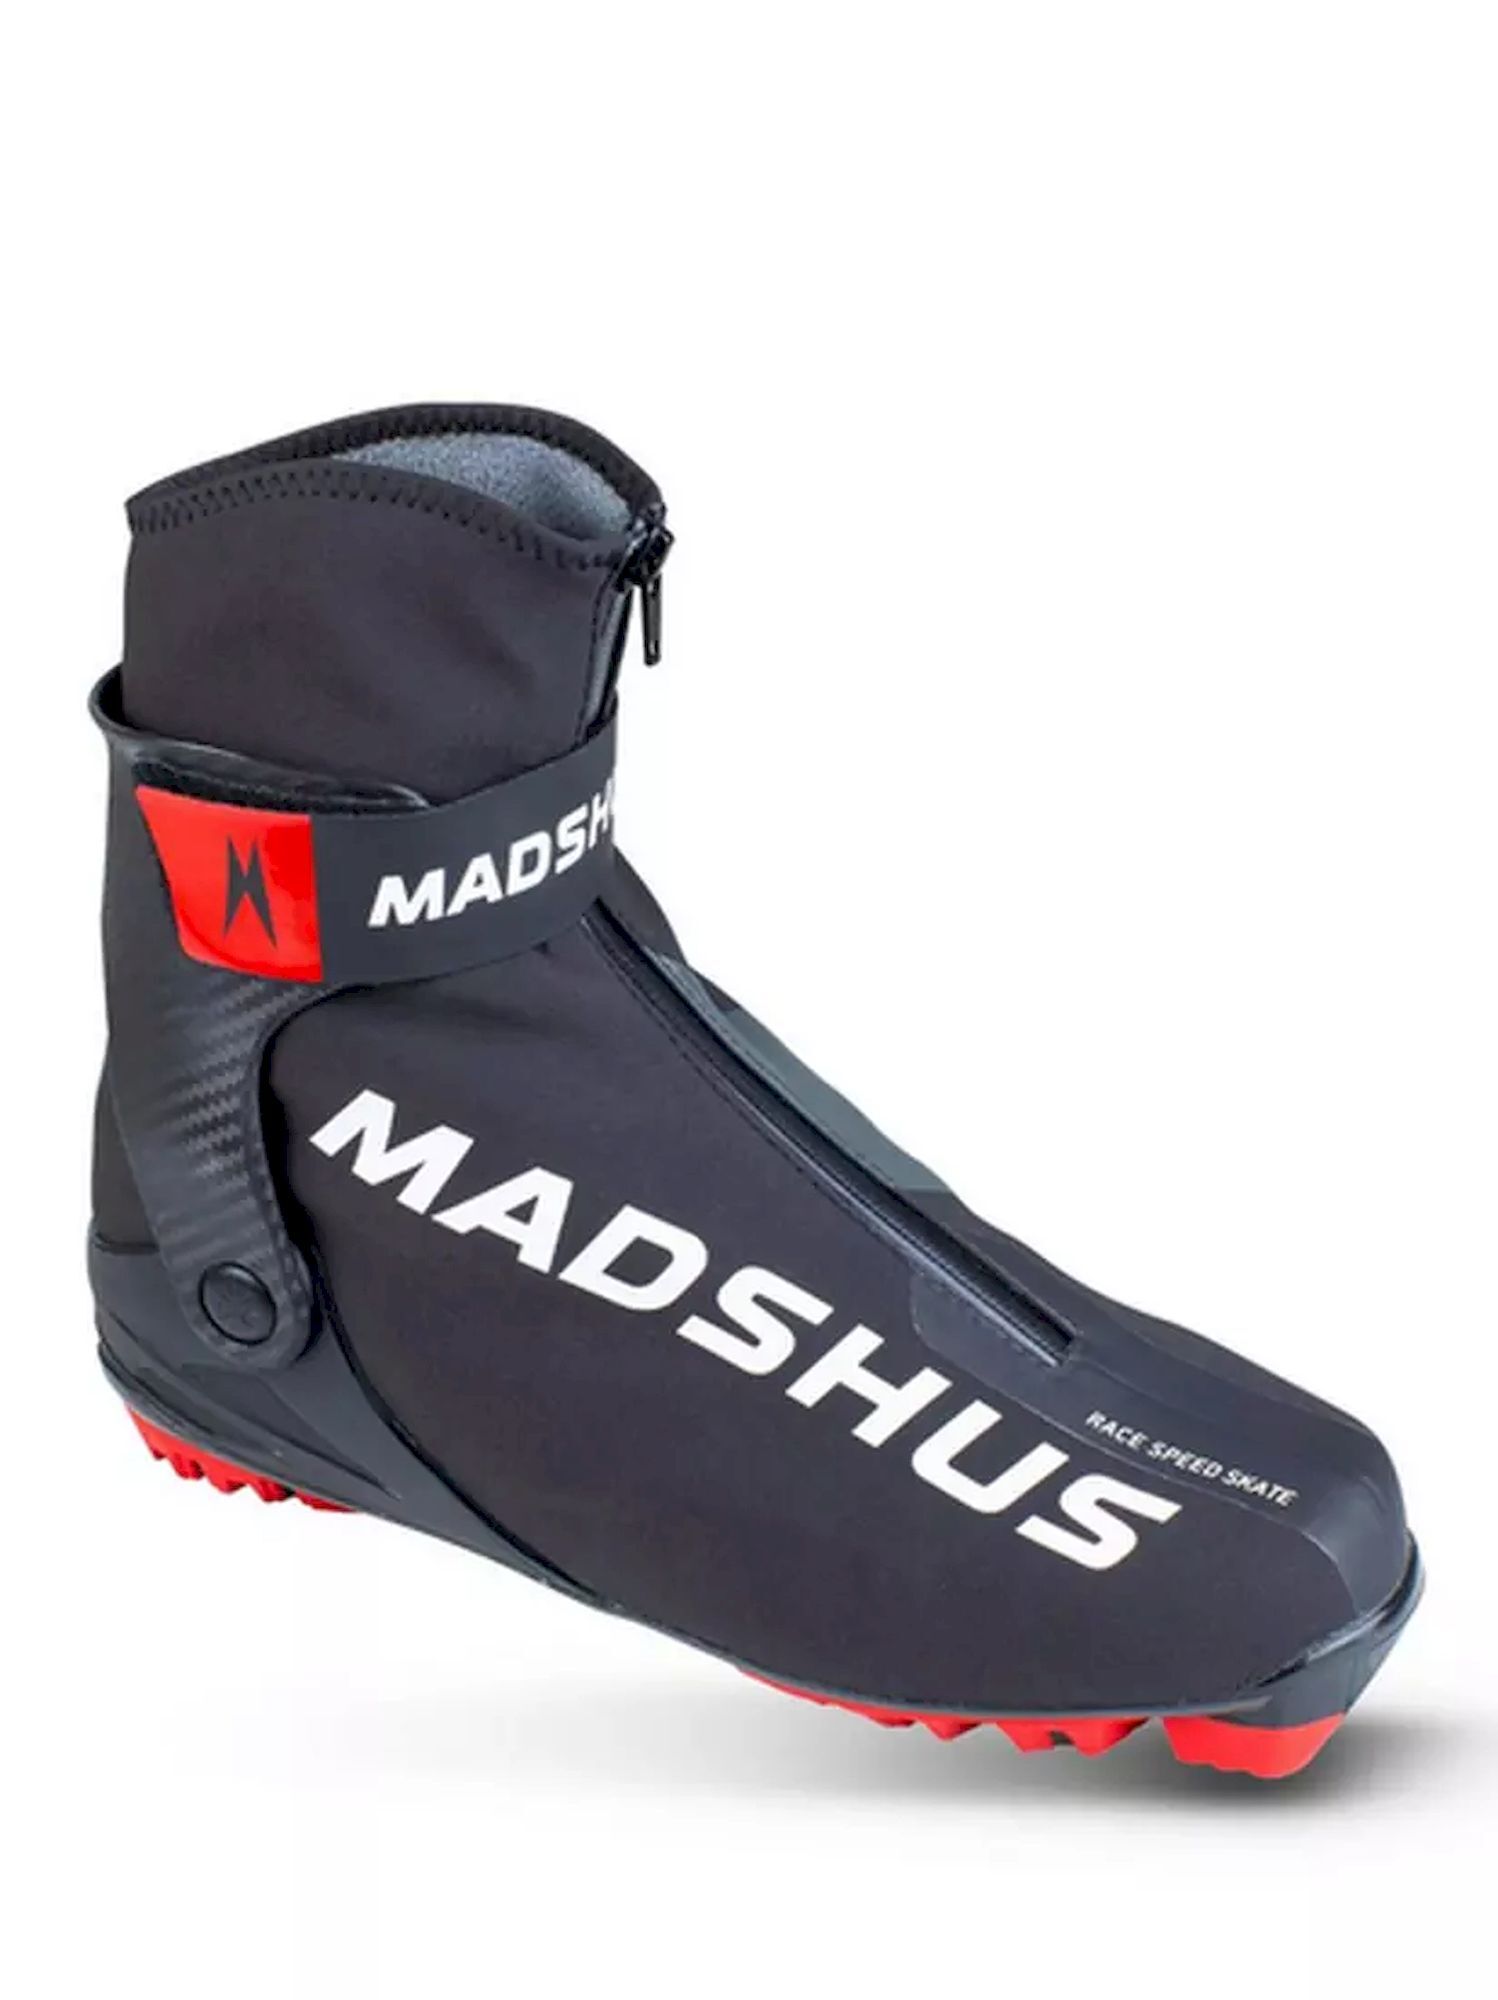 Madshus Race Speed Skate - Längdpjäxor | Hardloop